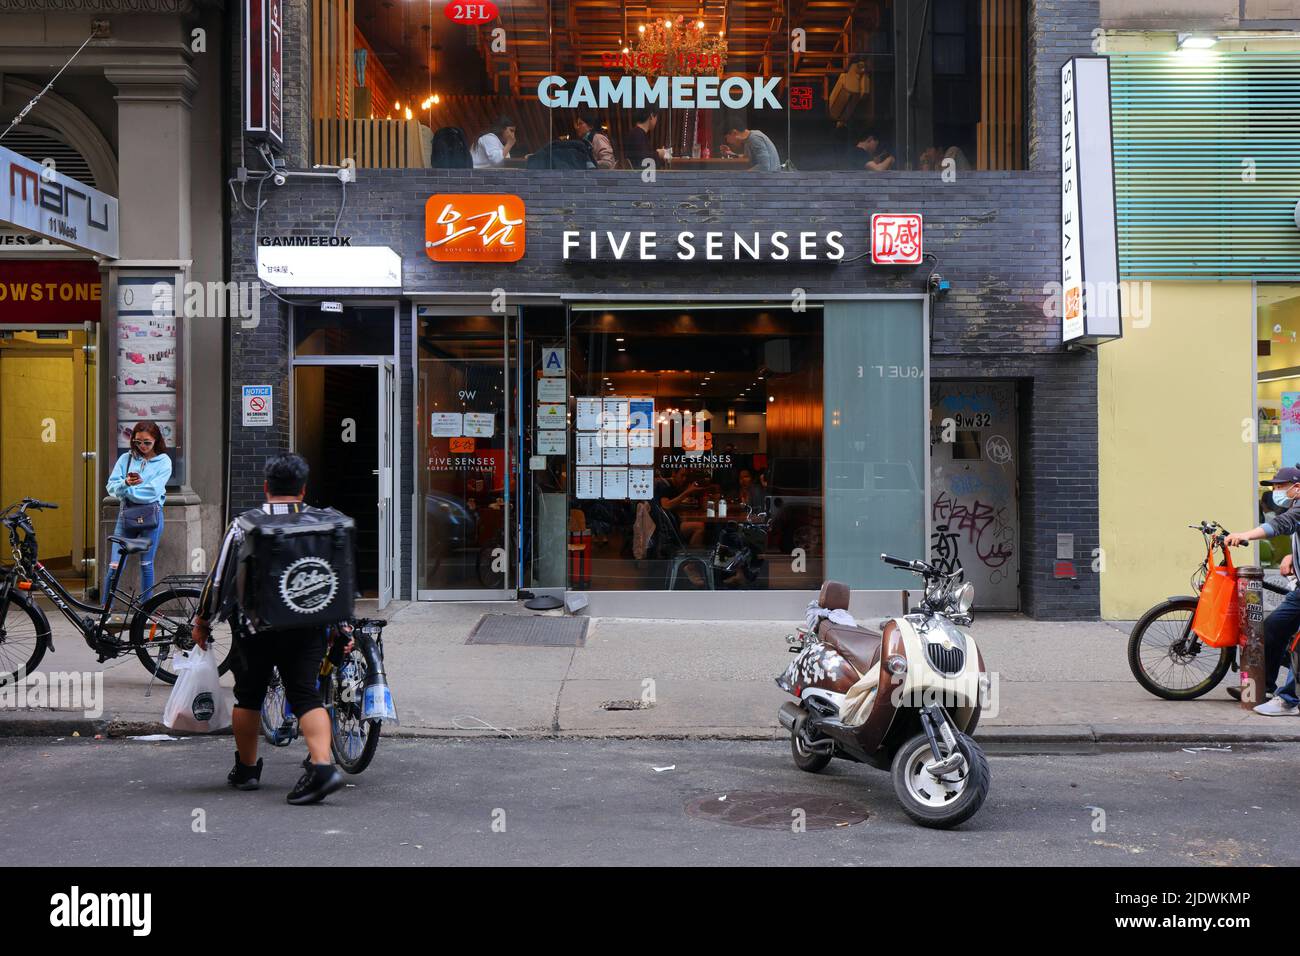 Five Senses 오감, Gammeeok 감미옥, 9 W 32nd St, New York, NYC storefront photo of Korean restaurants in Manhattan Koreatown. Stock Photo